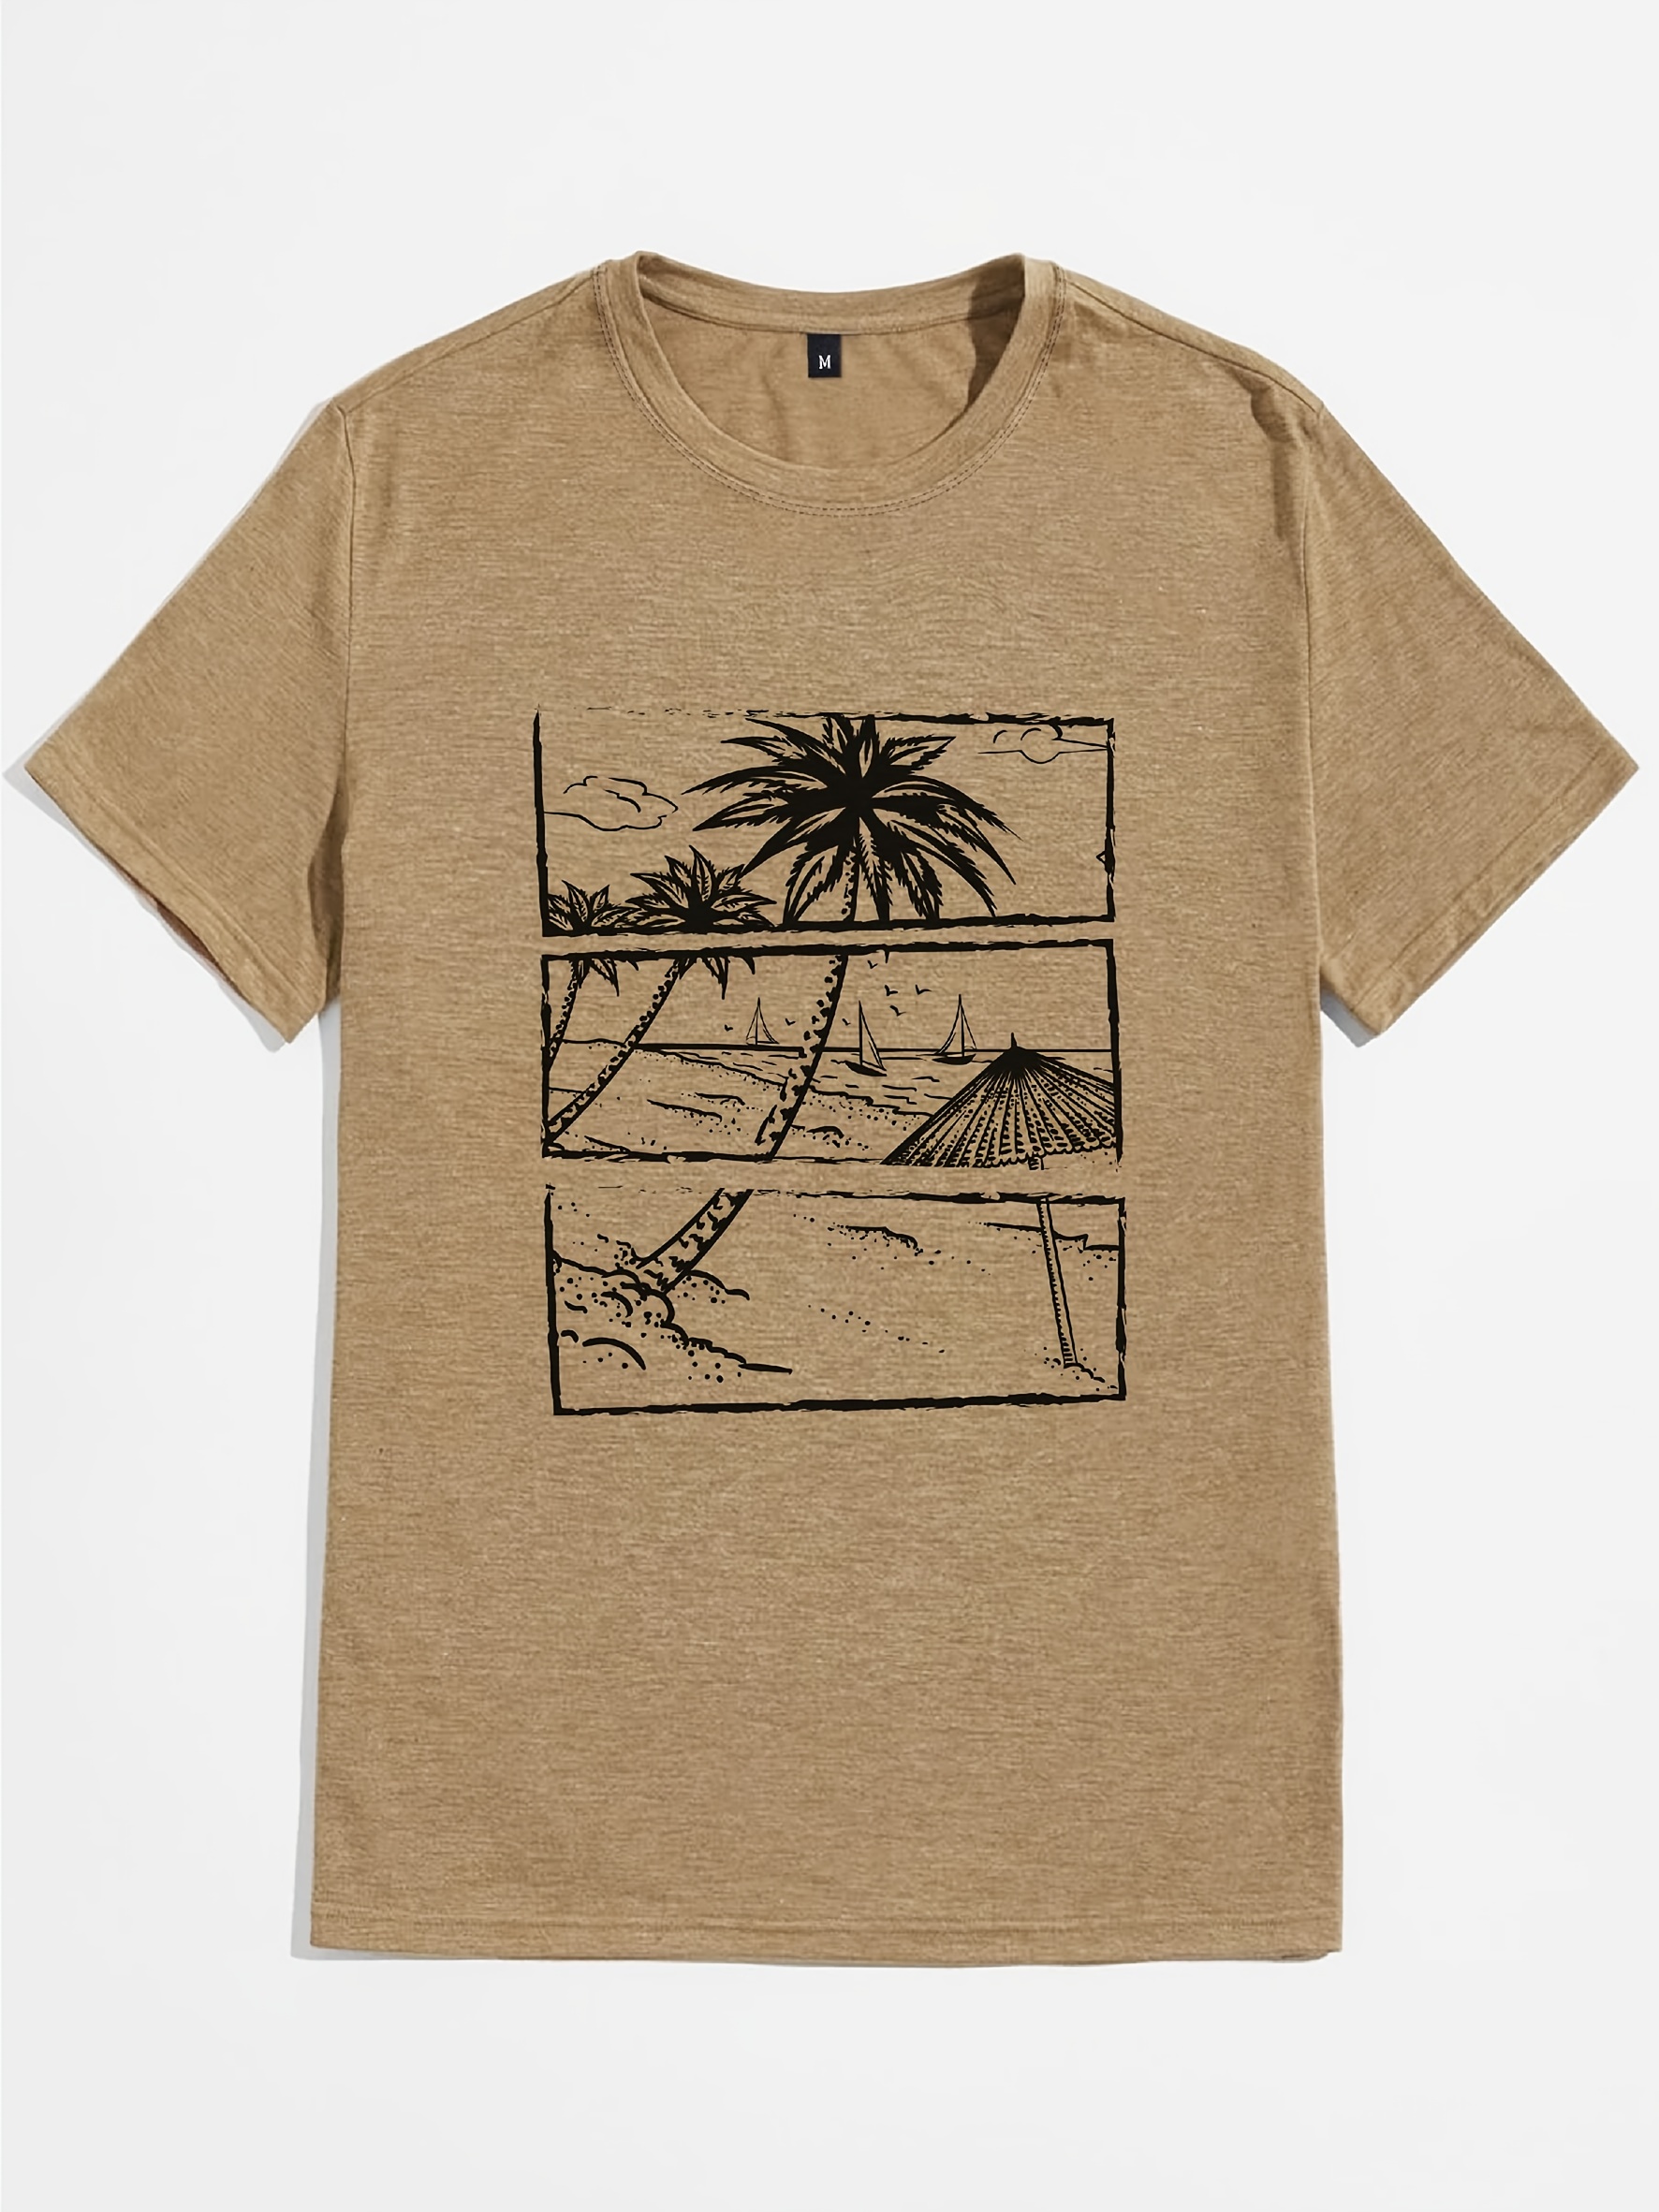 hawaiian beach round neck graphic t shirts causal tees short sleeves comfortable tops mens summer clothing details 11